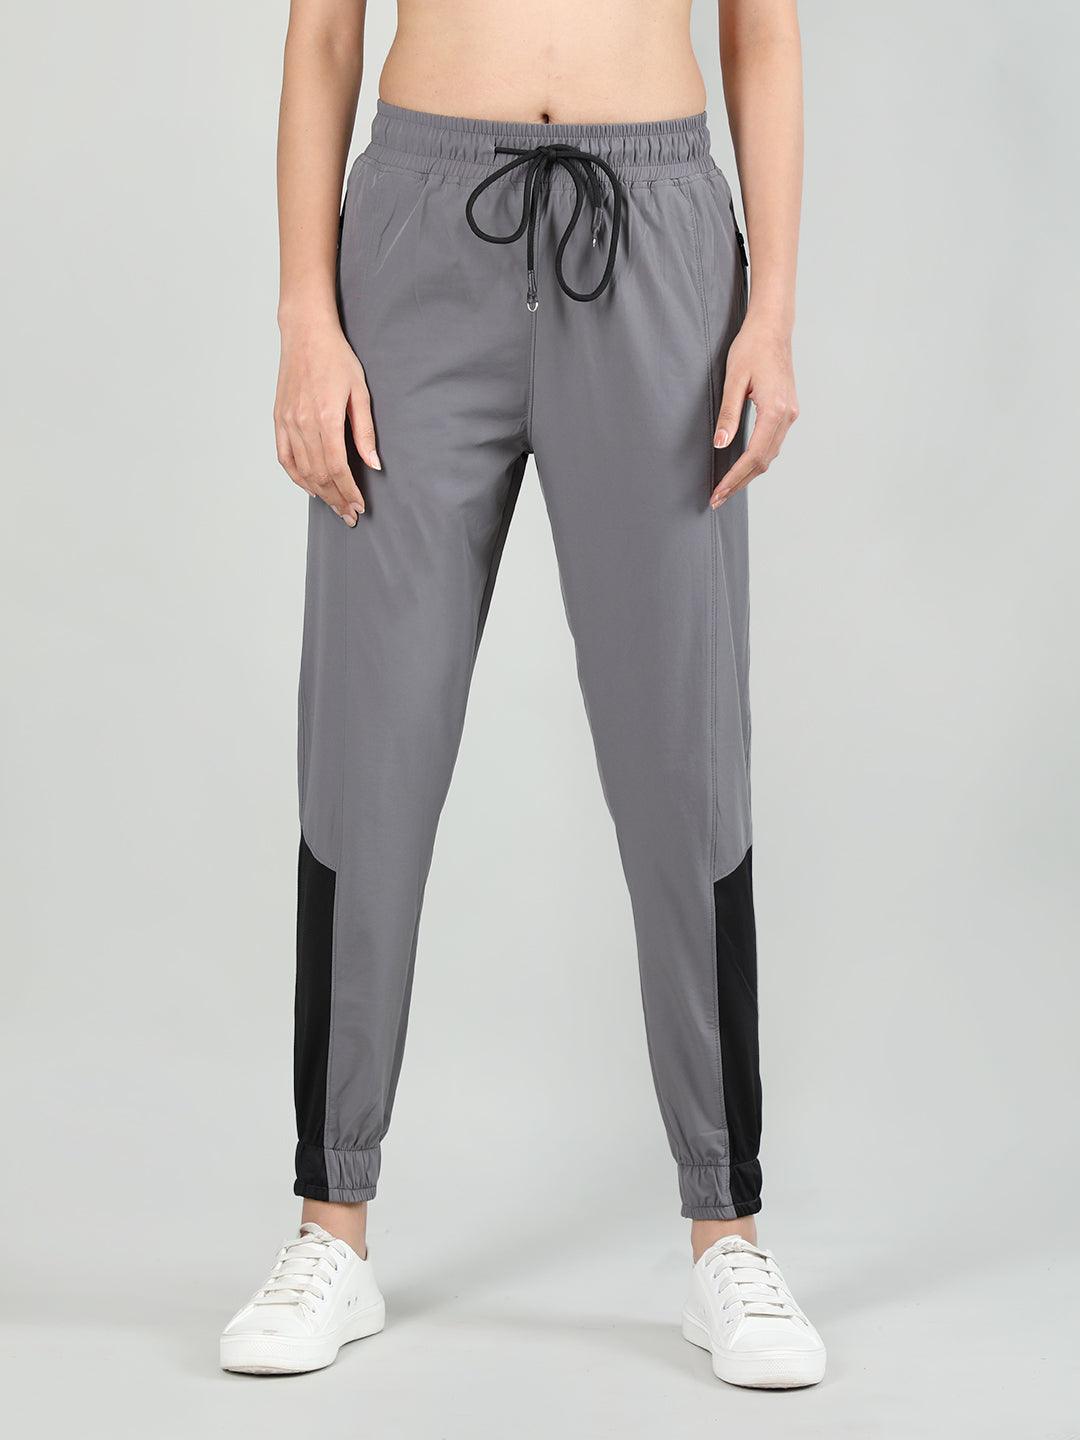 Adidas: Black 3 Stripes Tapered Track Pants w Pockets, Size Large (Fits  Medium) | Gym shorts womens, Black adidas, Track pants